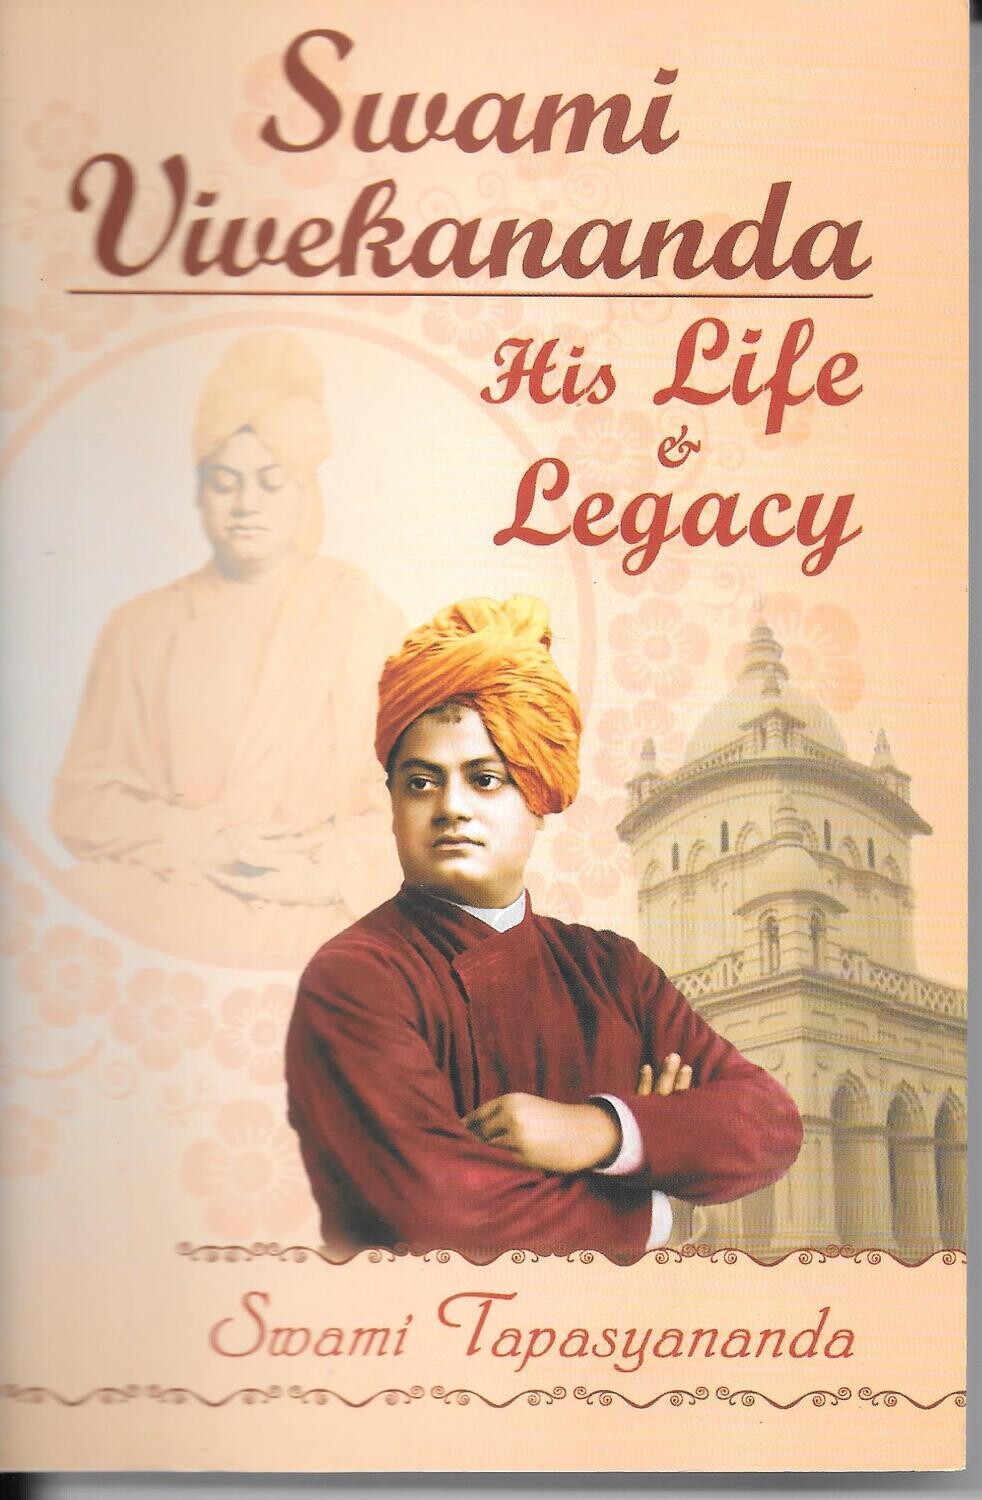 Swami Vivekananda His Life and Legacy